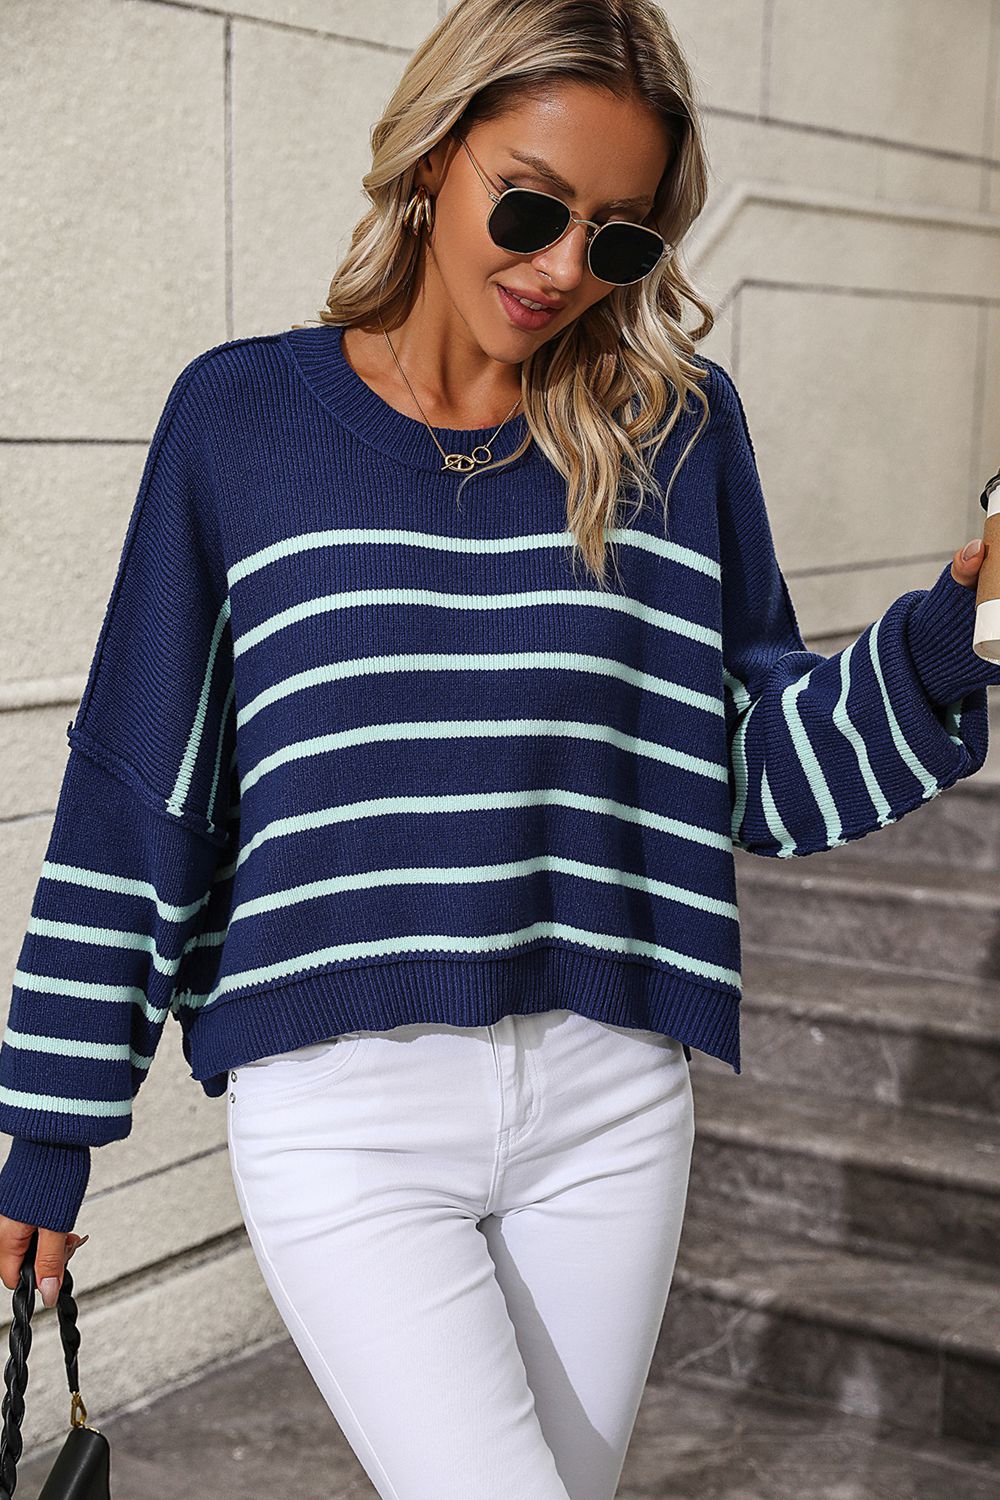 Stripe Crop Sweater - Women's Knitwear Round Ribbed Top Sweaters - Chuzko Women Clothing